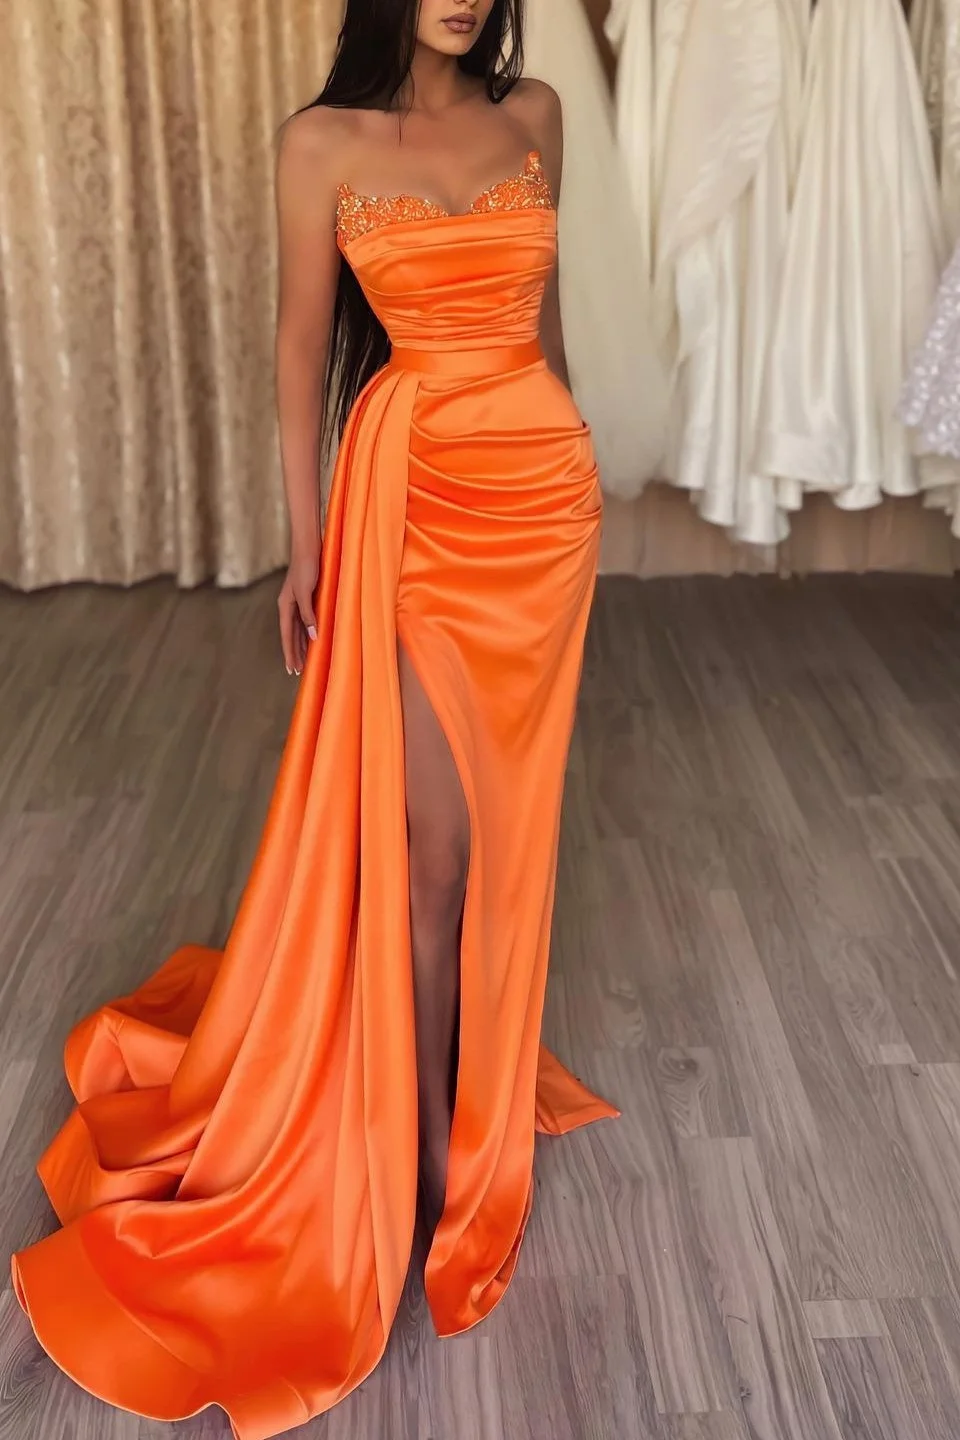 Daisda Orange Strapless Split Long Mermaid Prom Dress With Ruffles